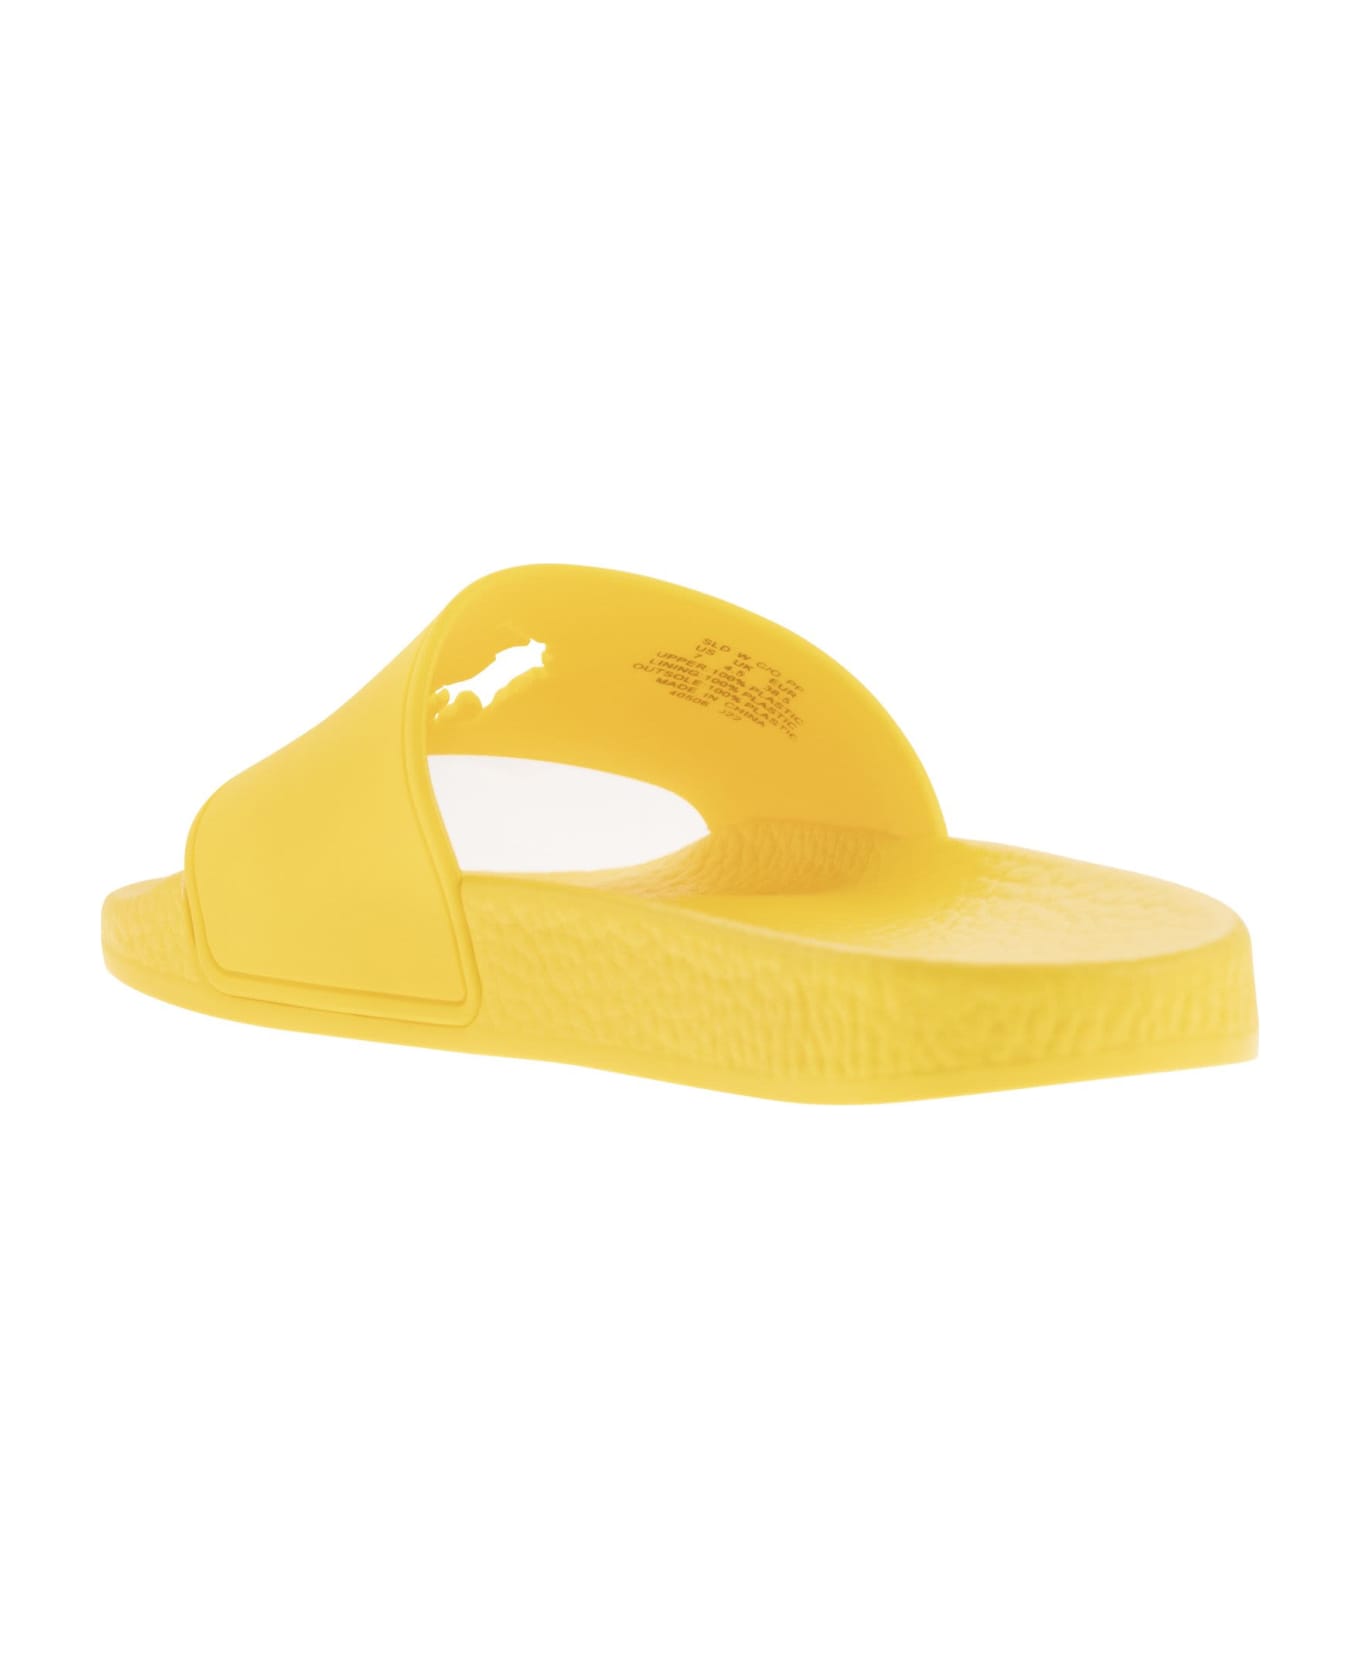 Polo Ralph Lauren Big Pony Slippers - Yellow サンダル